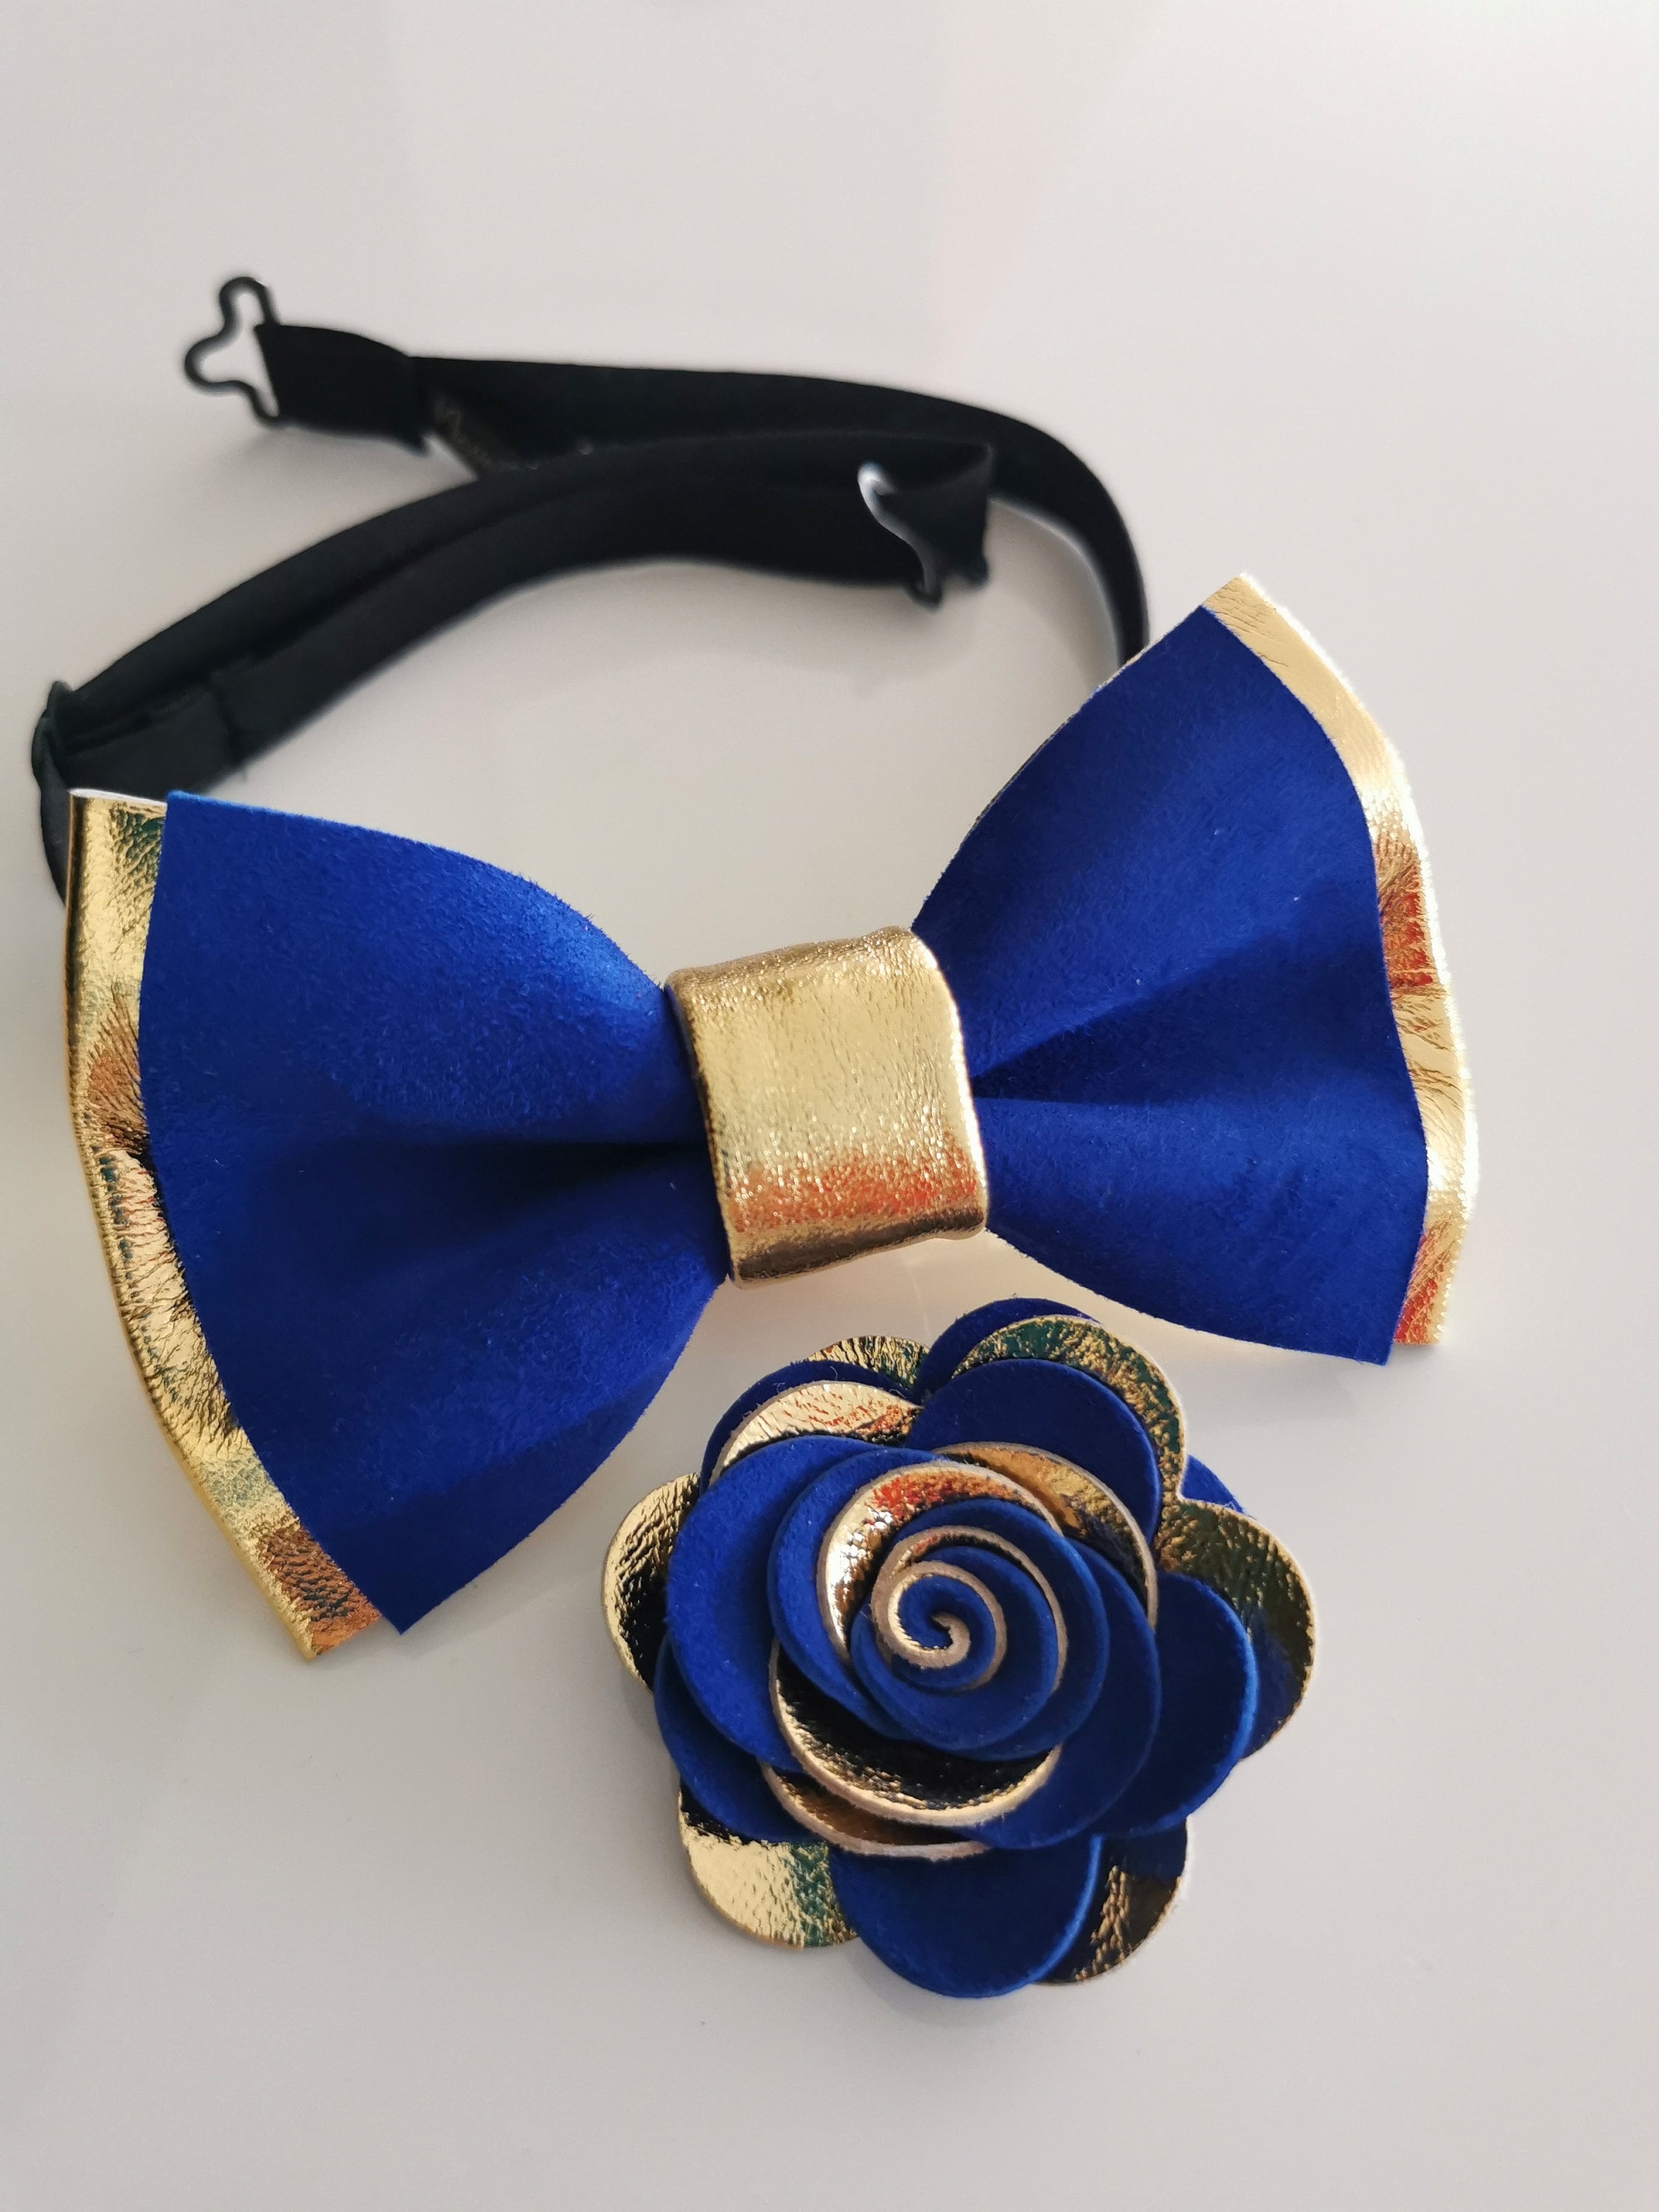 Gold Bow Tie for men,weddings Gold accessories,summer Wedding 2018,gold Bow Tie for Groom groomsmen,tie elegant,golden inspiration,luxury